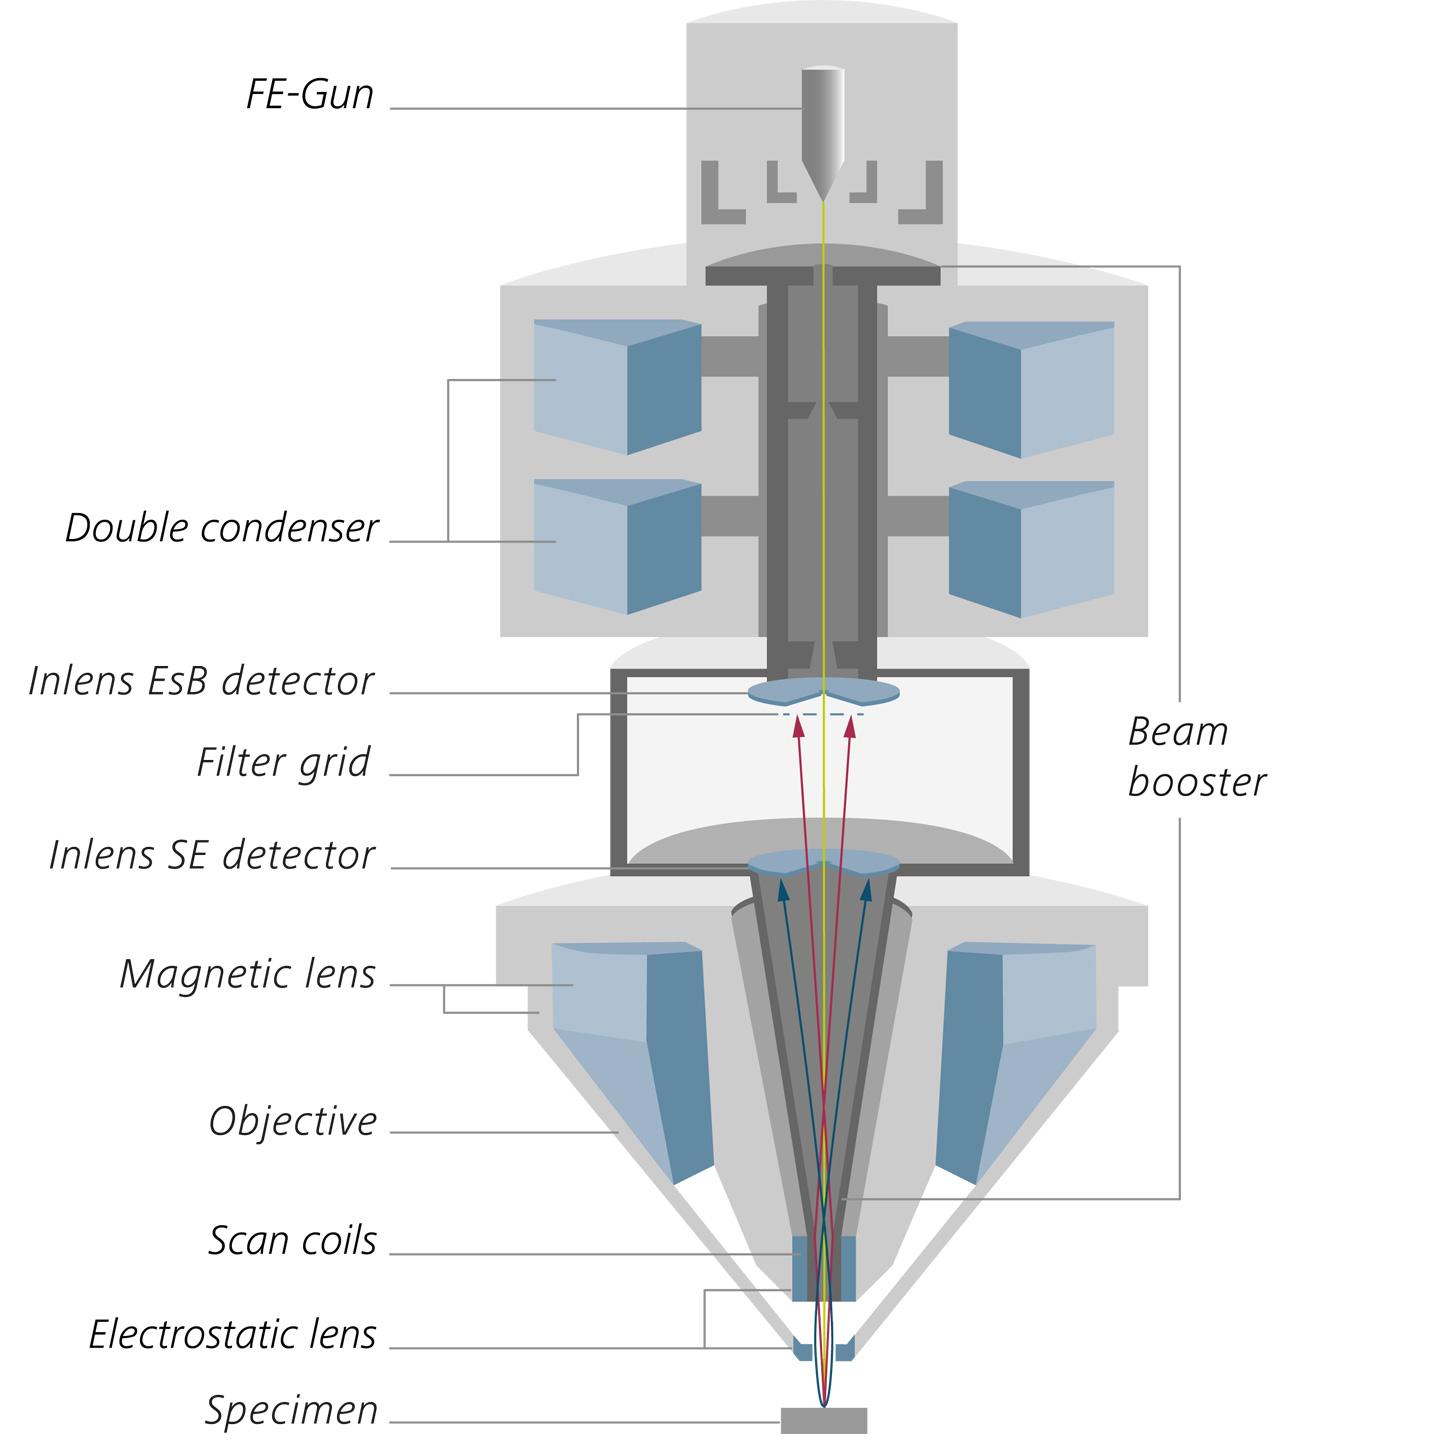 Gemini技术。Gemini 2电子光学镜筒截面示意图，包含一个双聚光镜、电子束推进器、Inlens探测器和Gemini物镜。